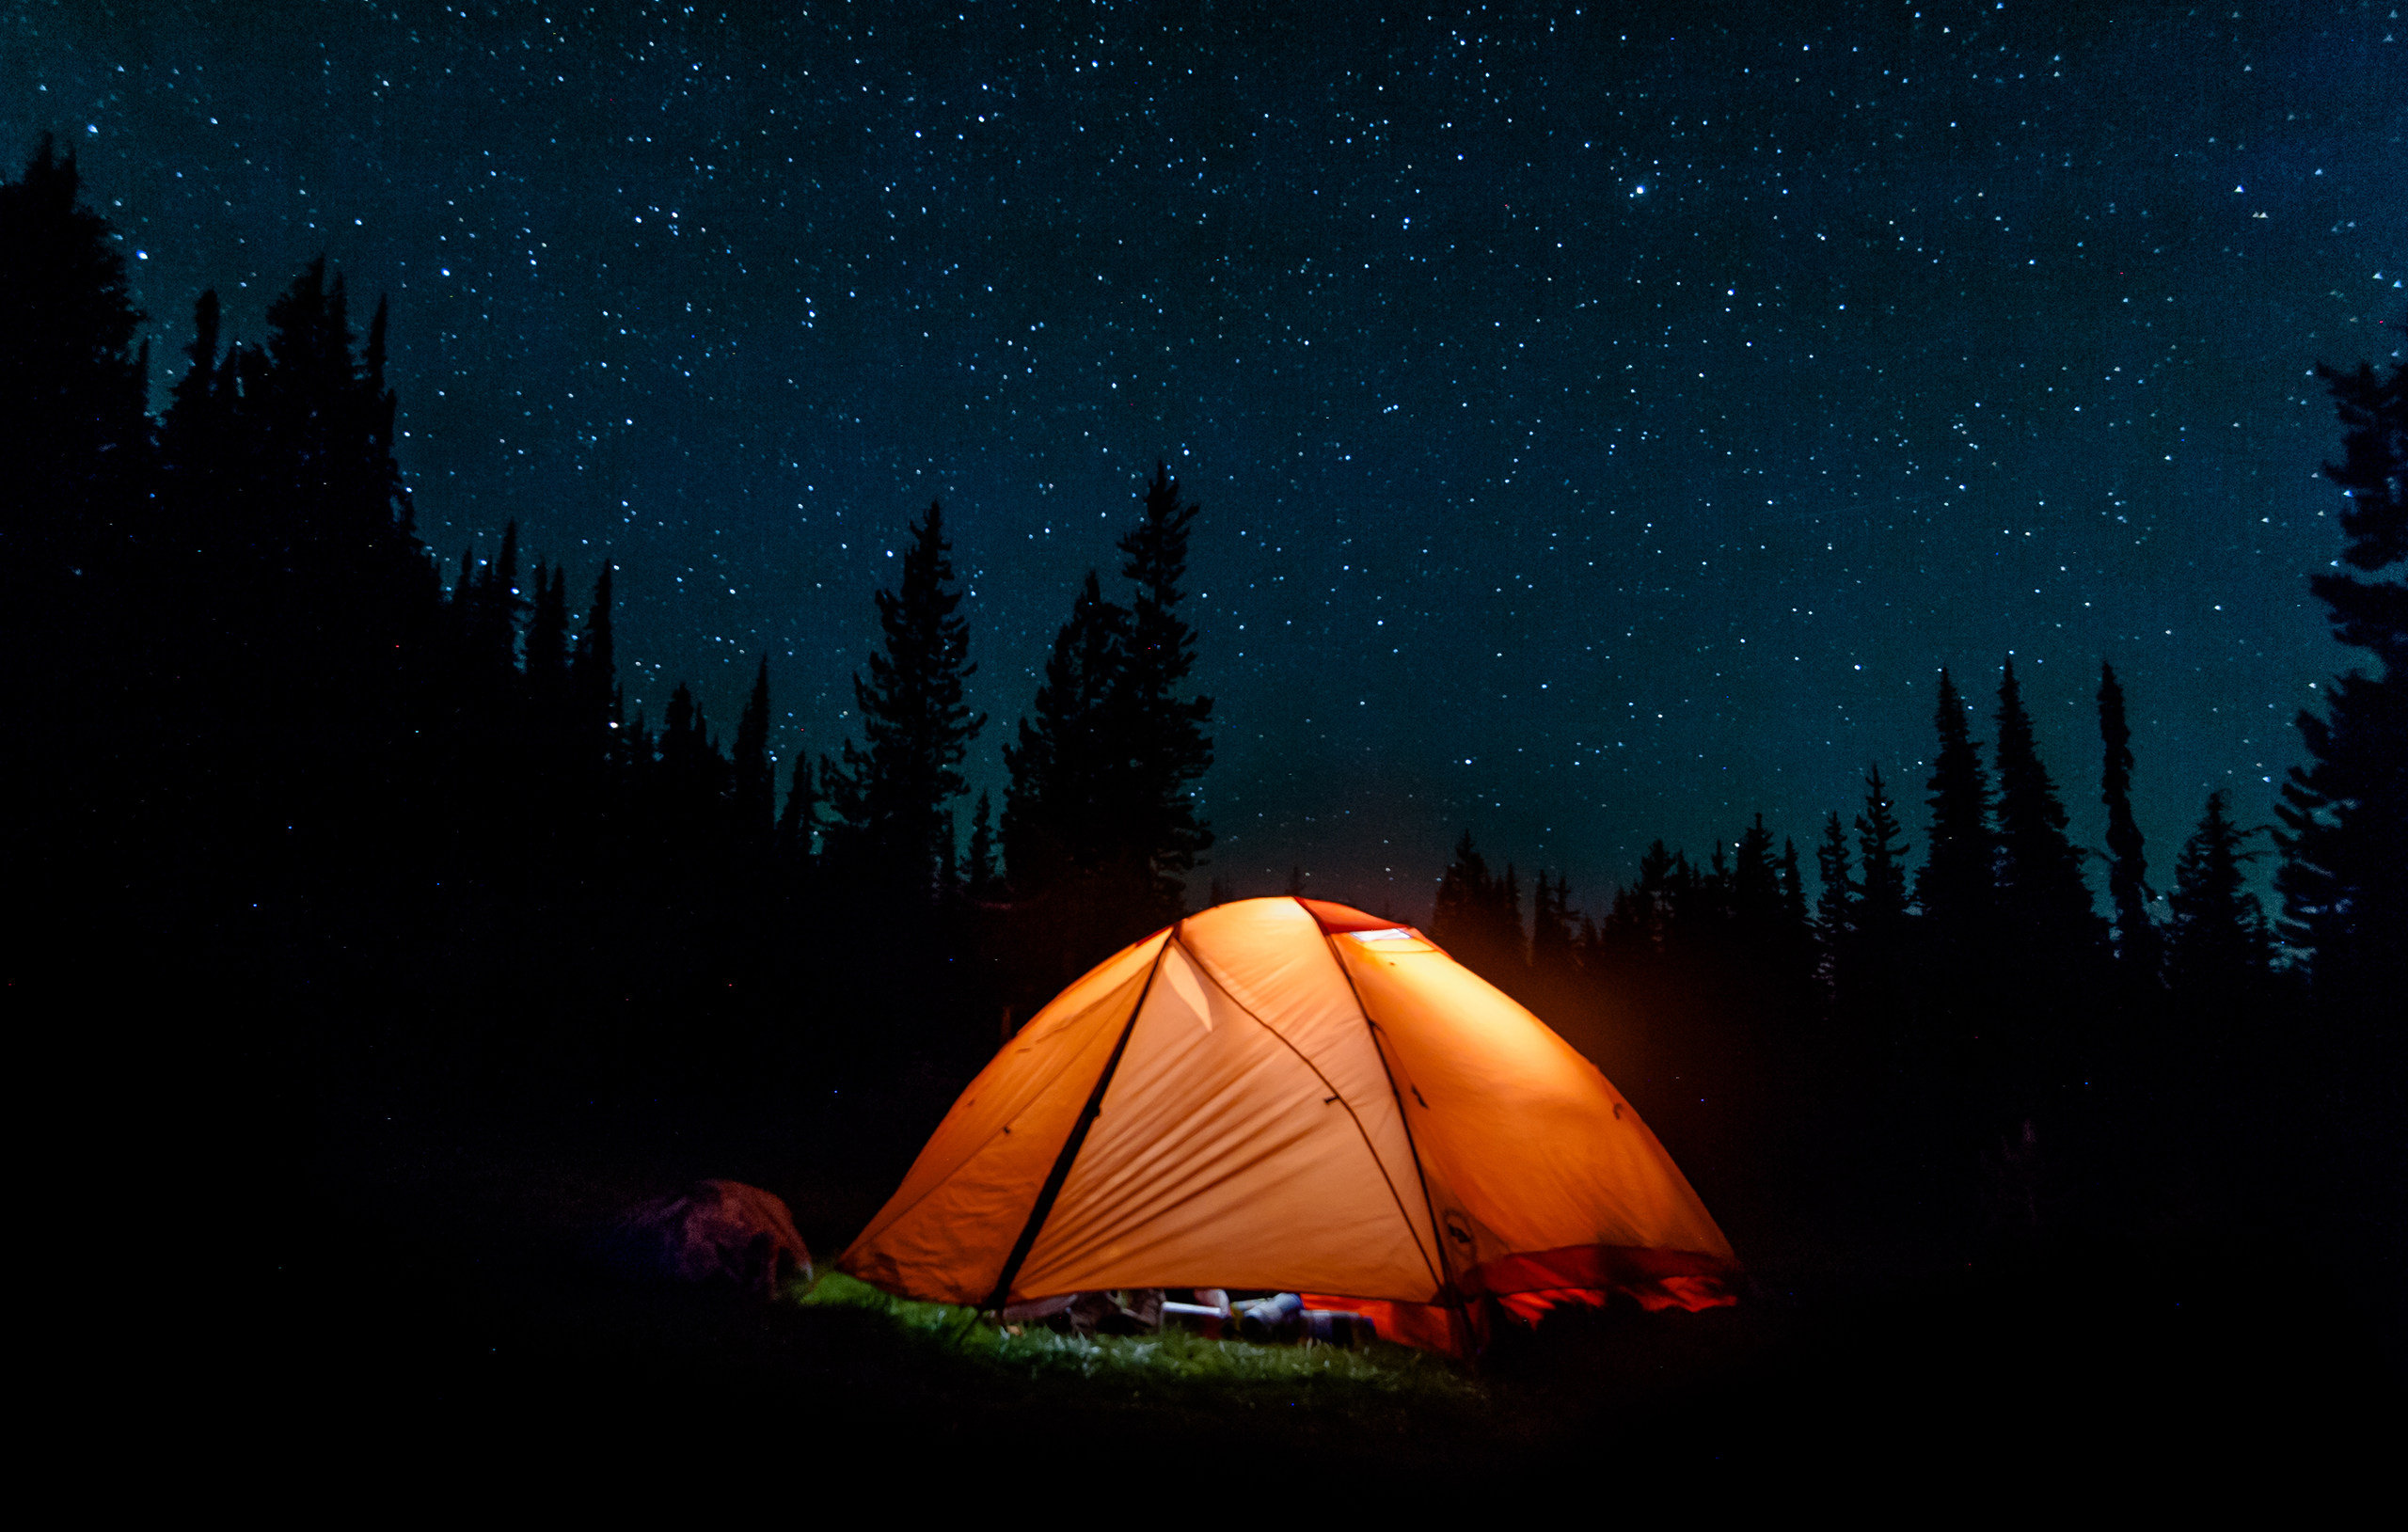 Orange tent lit up with lights under a starry sky.